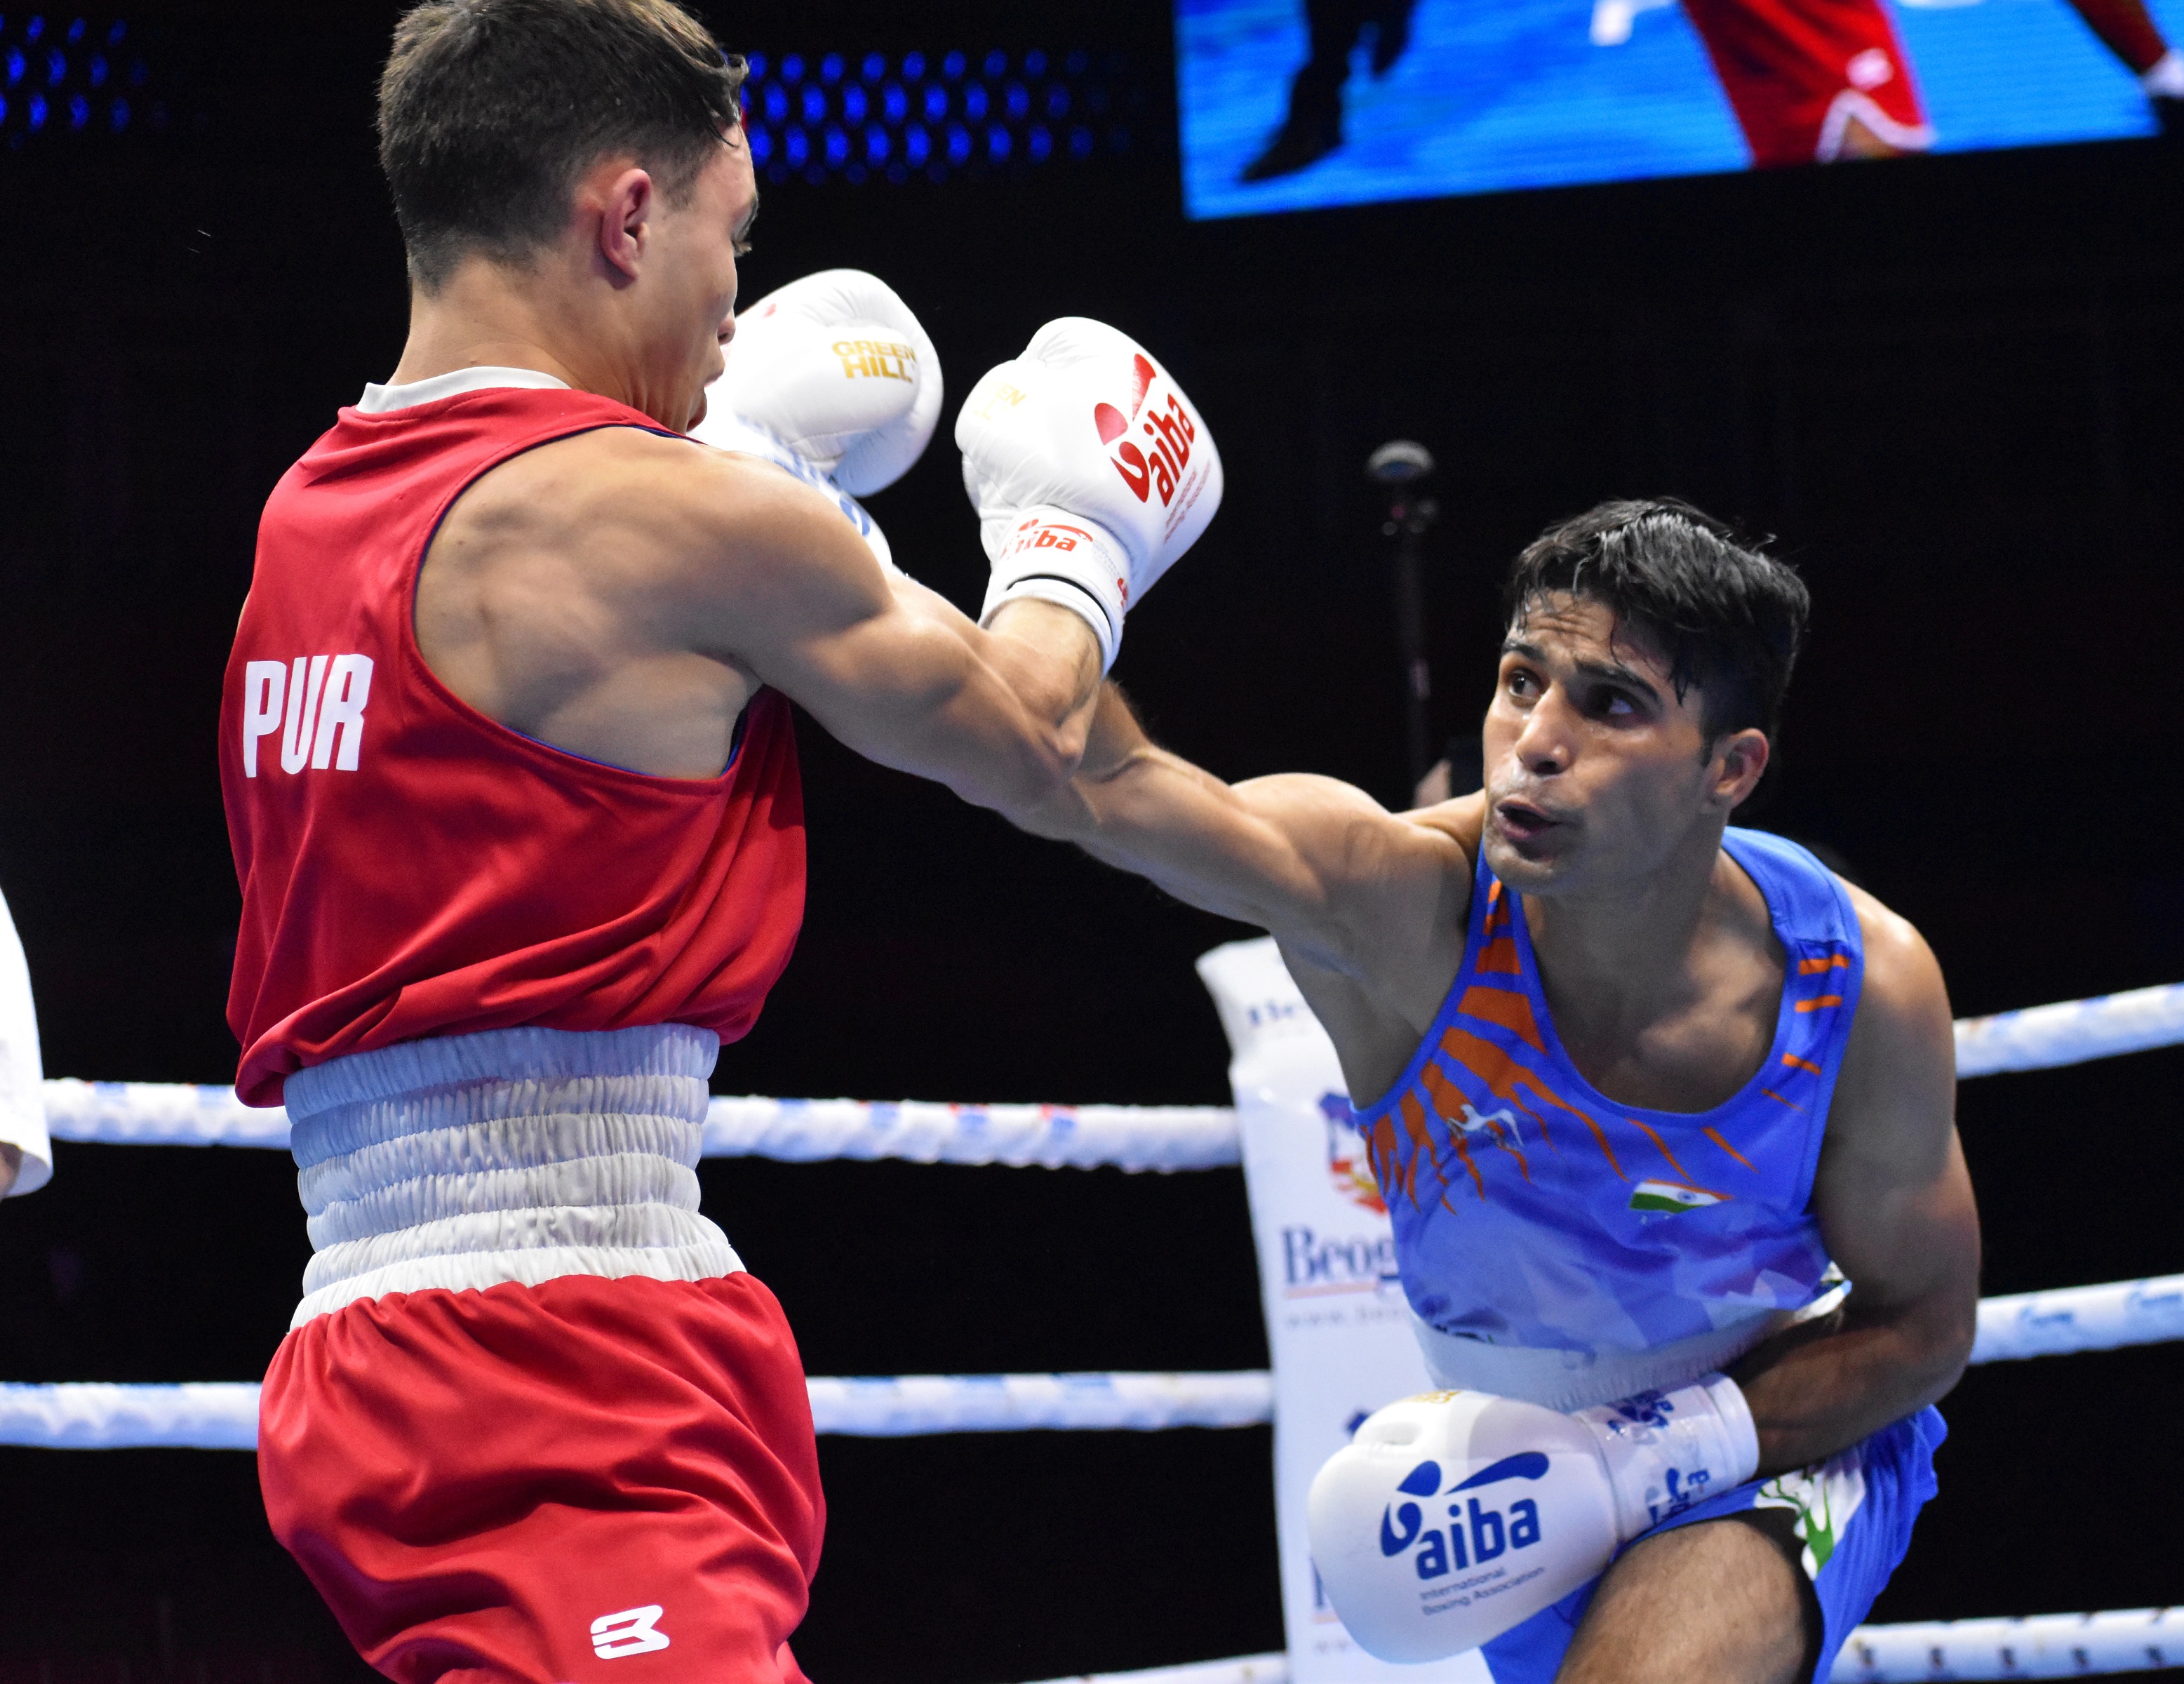 Akash Kumar enters quarter-finals at the 2021 AIBA Men’s World Boxing Championships decoding=